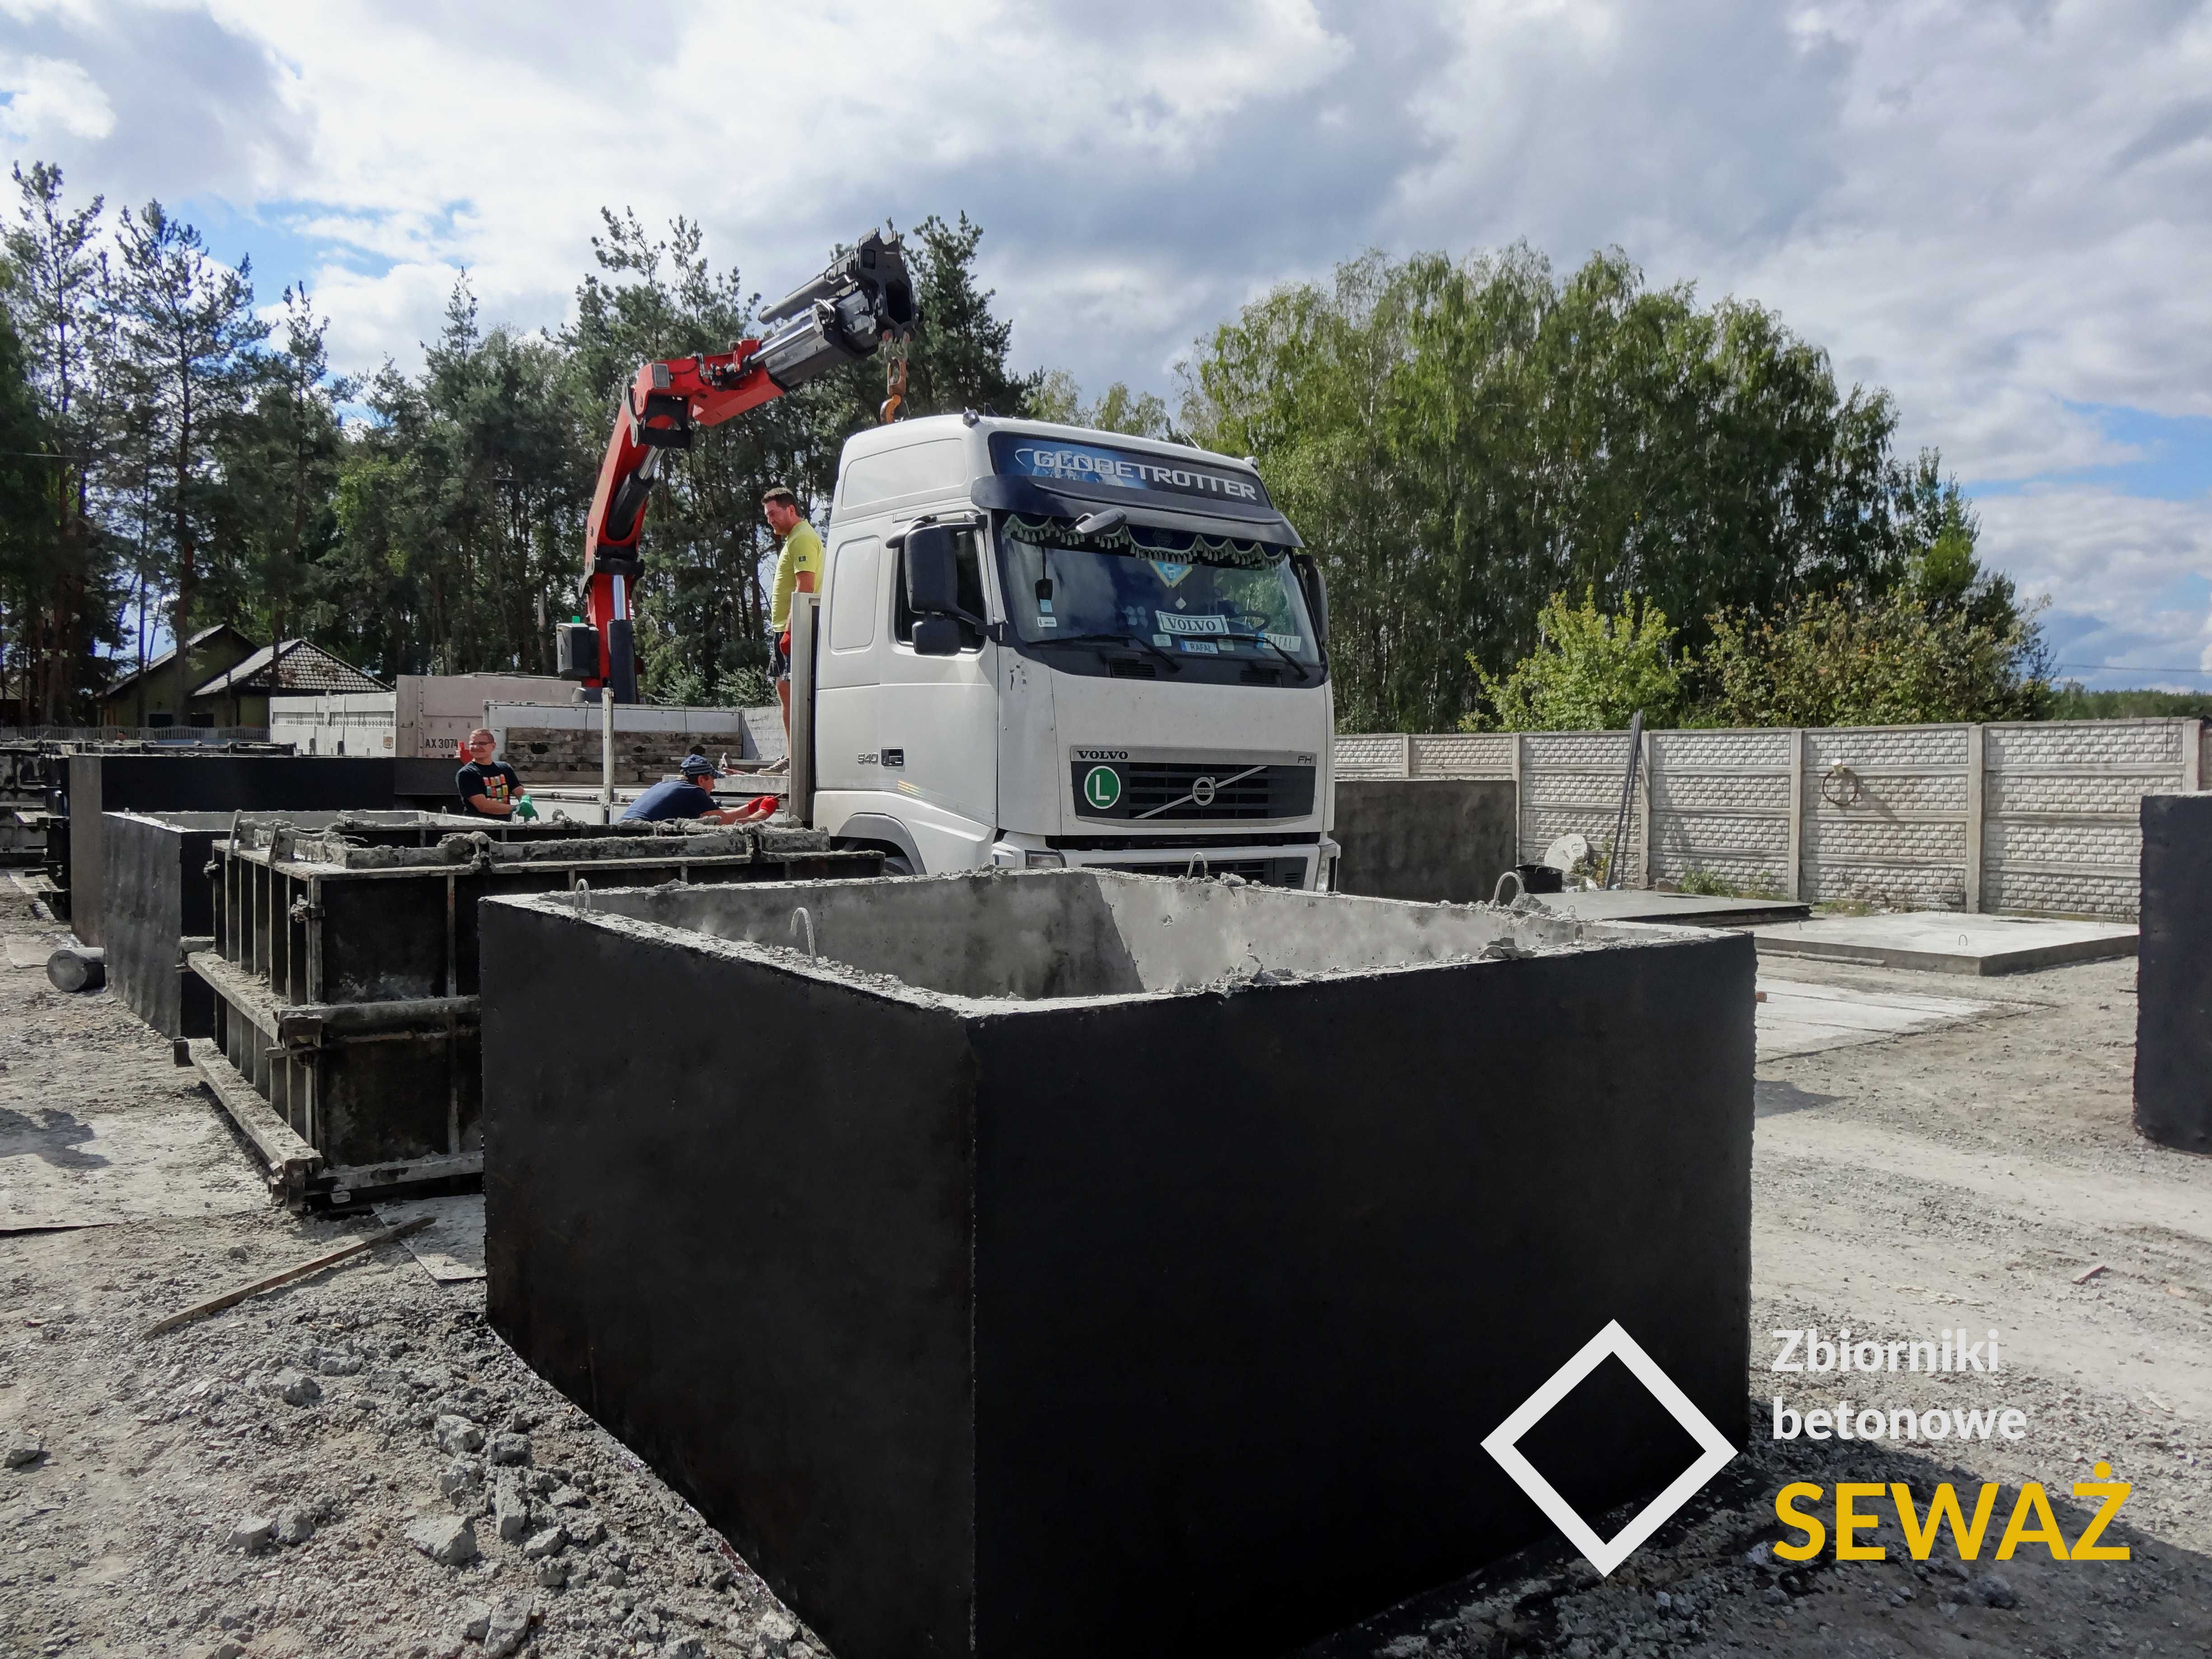 Szambo / Zbiornik betonowy 8m3 - Atest PZH, Aprobata ITB, TANIO